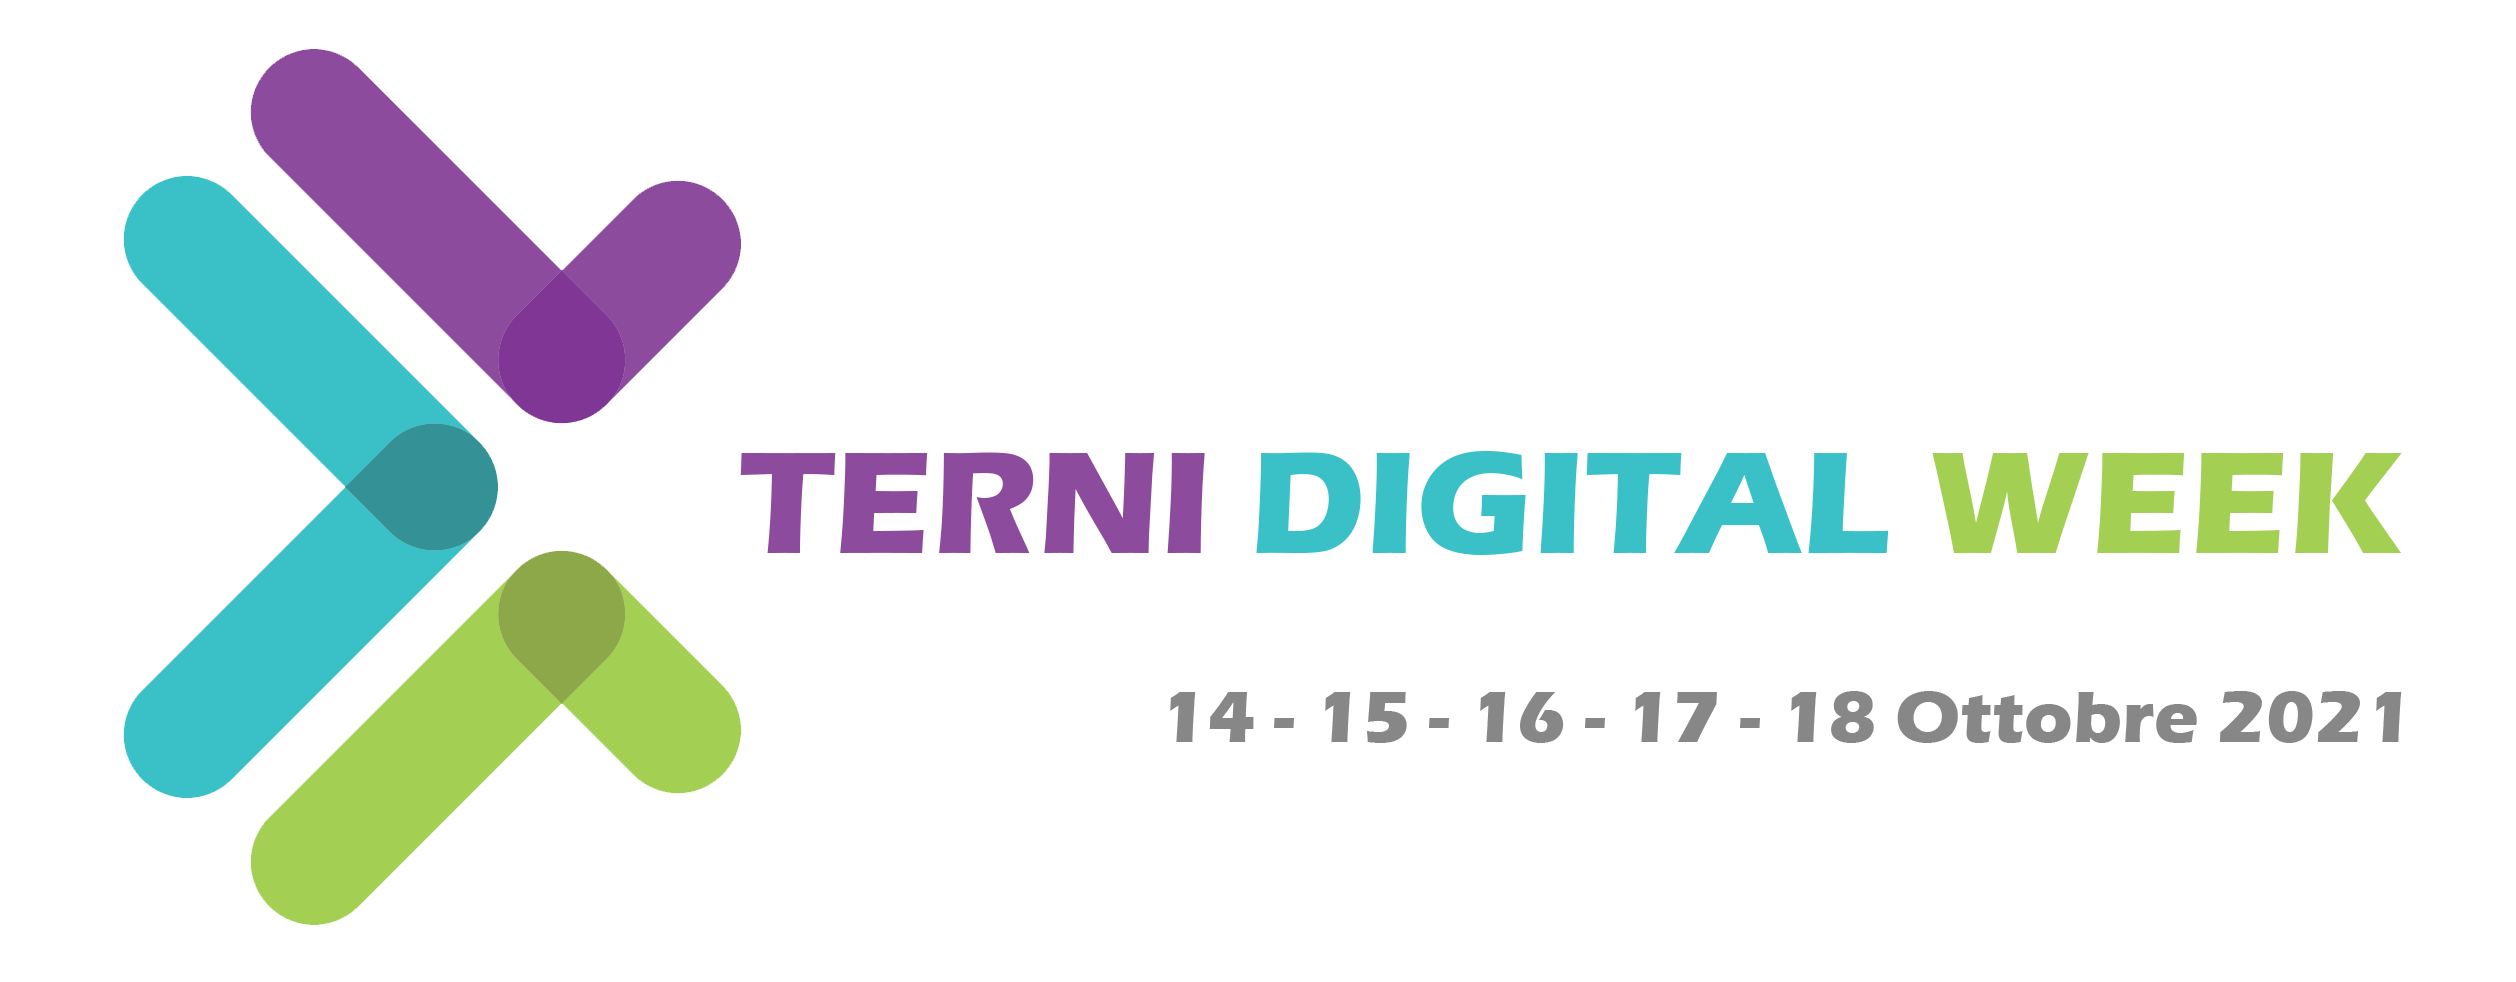 Terni Digital Week